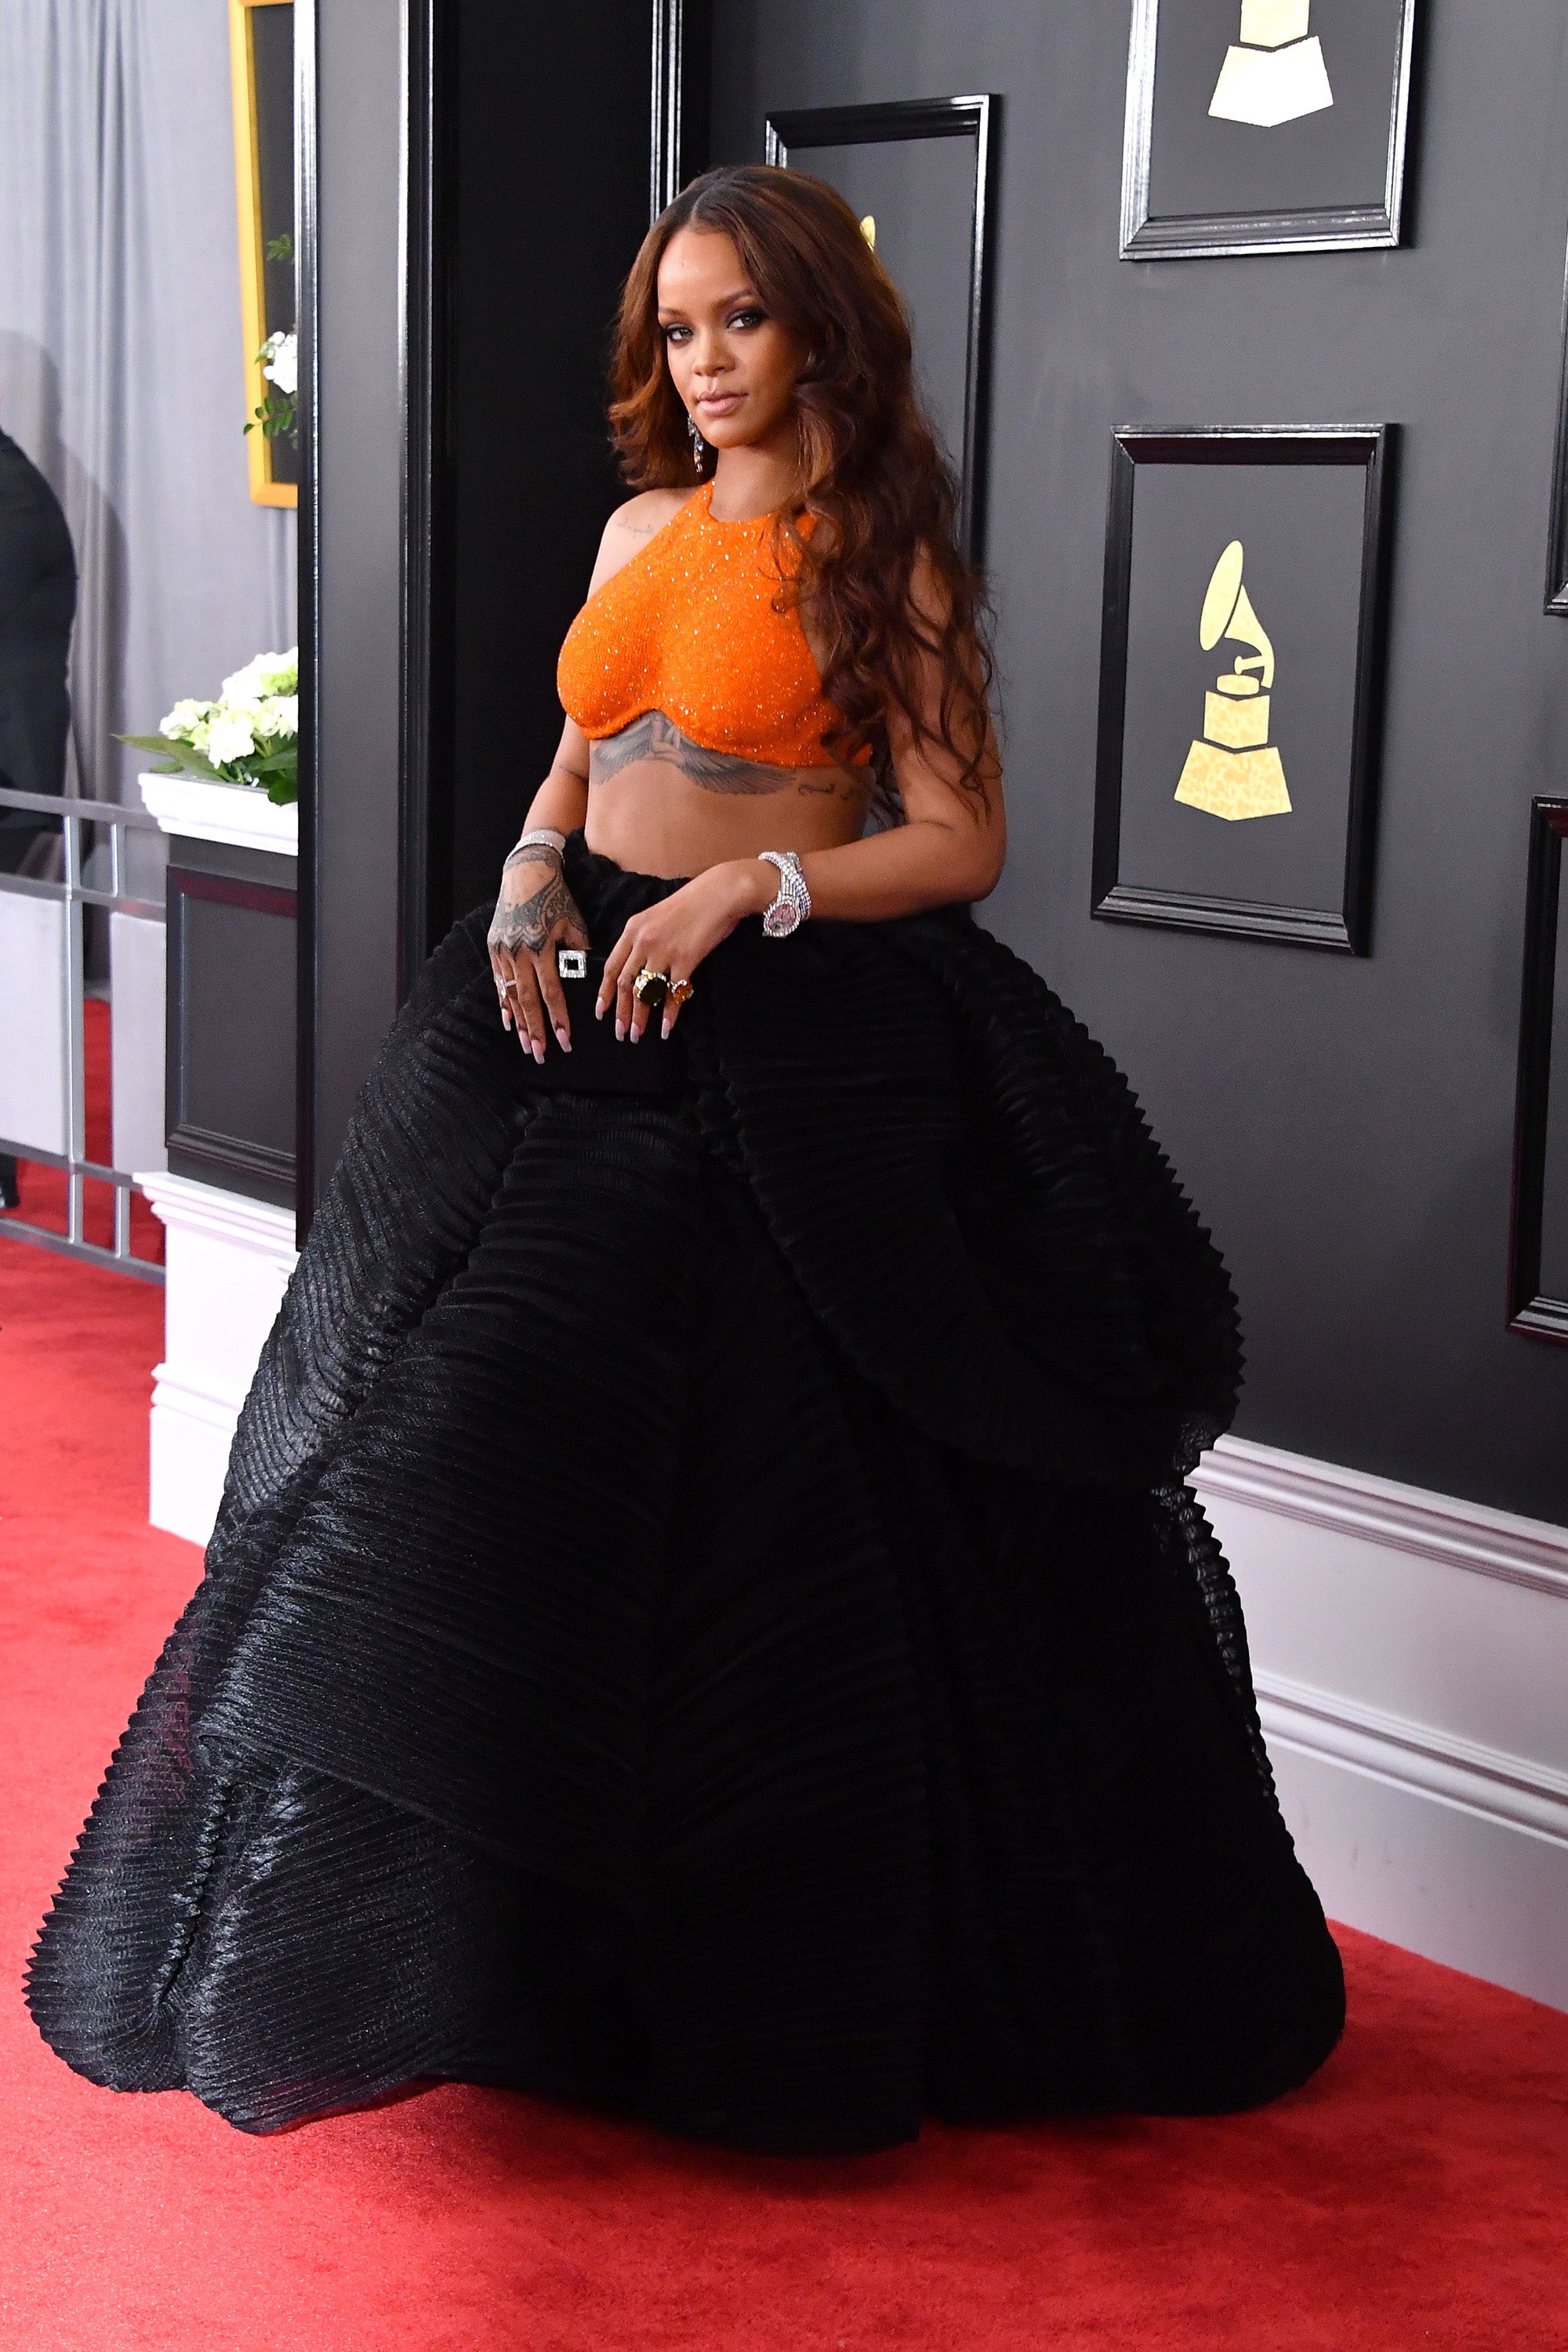 Rihanna Rocks Sparkly Orange Crop Top On Grammy Awards Red Carpet